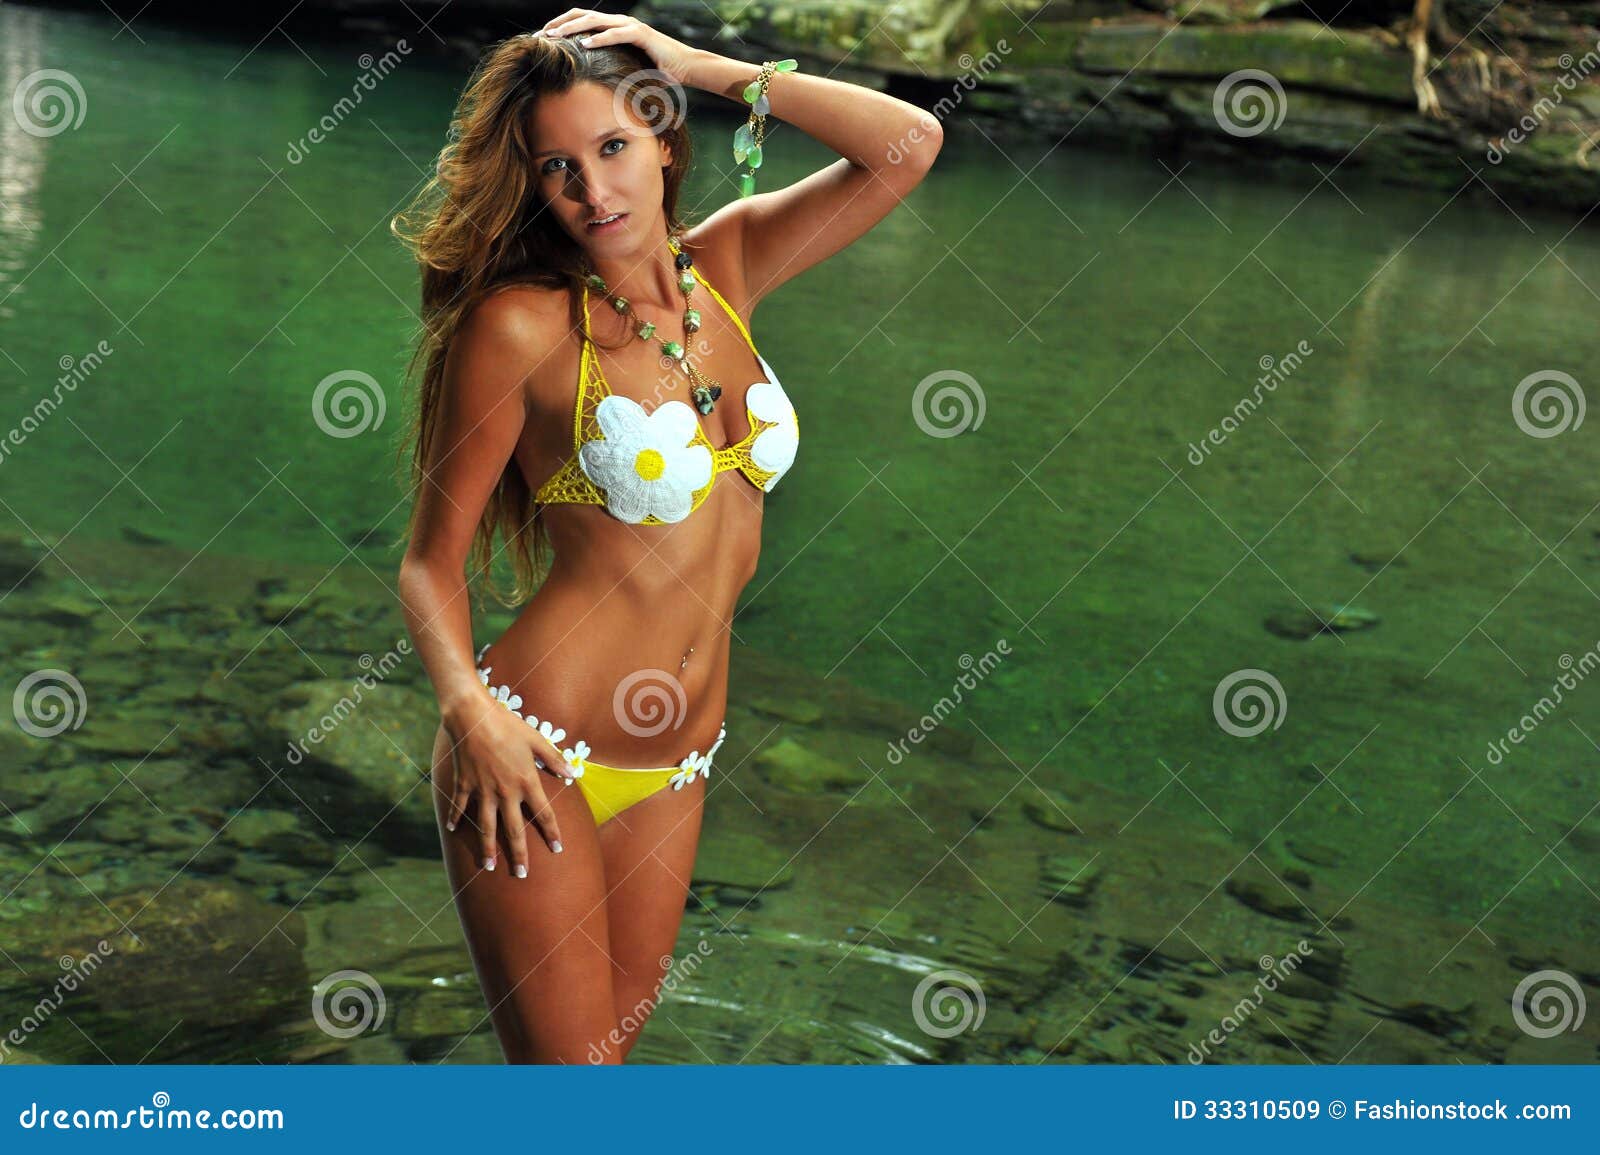 4,218 Young Woman Bikini Lake Stock Photos - Free & Royalty-Free